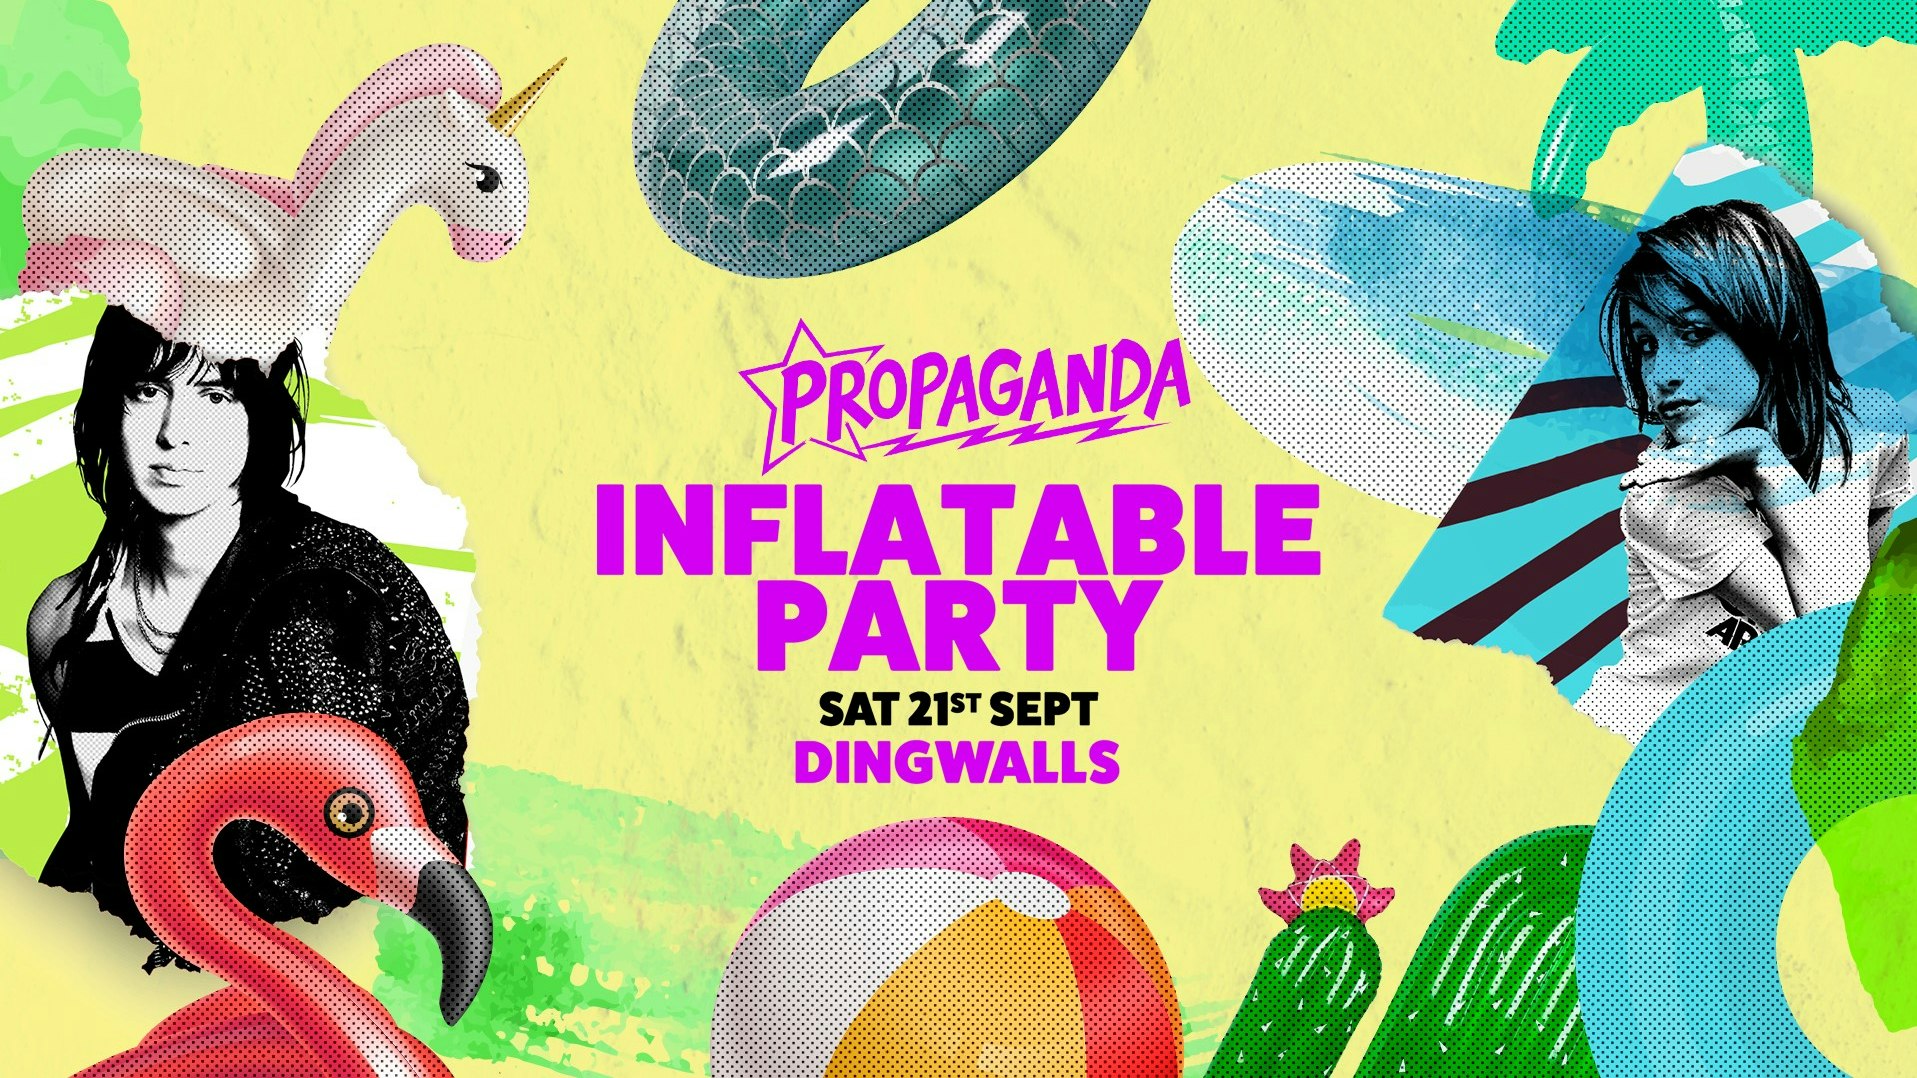 Propaganda London – Inflatable Party!